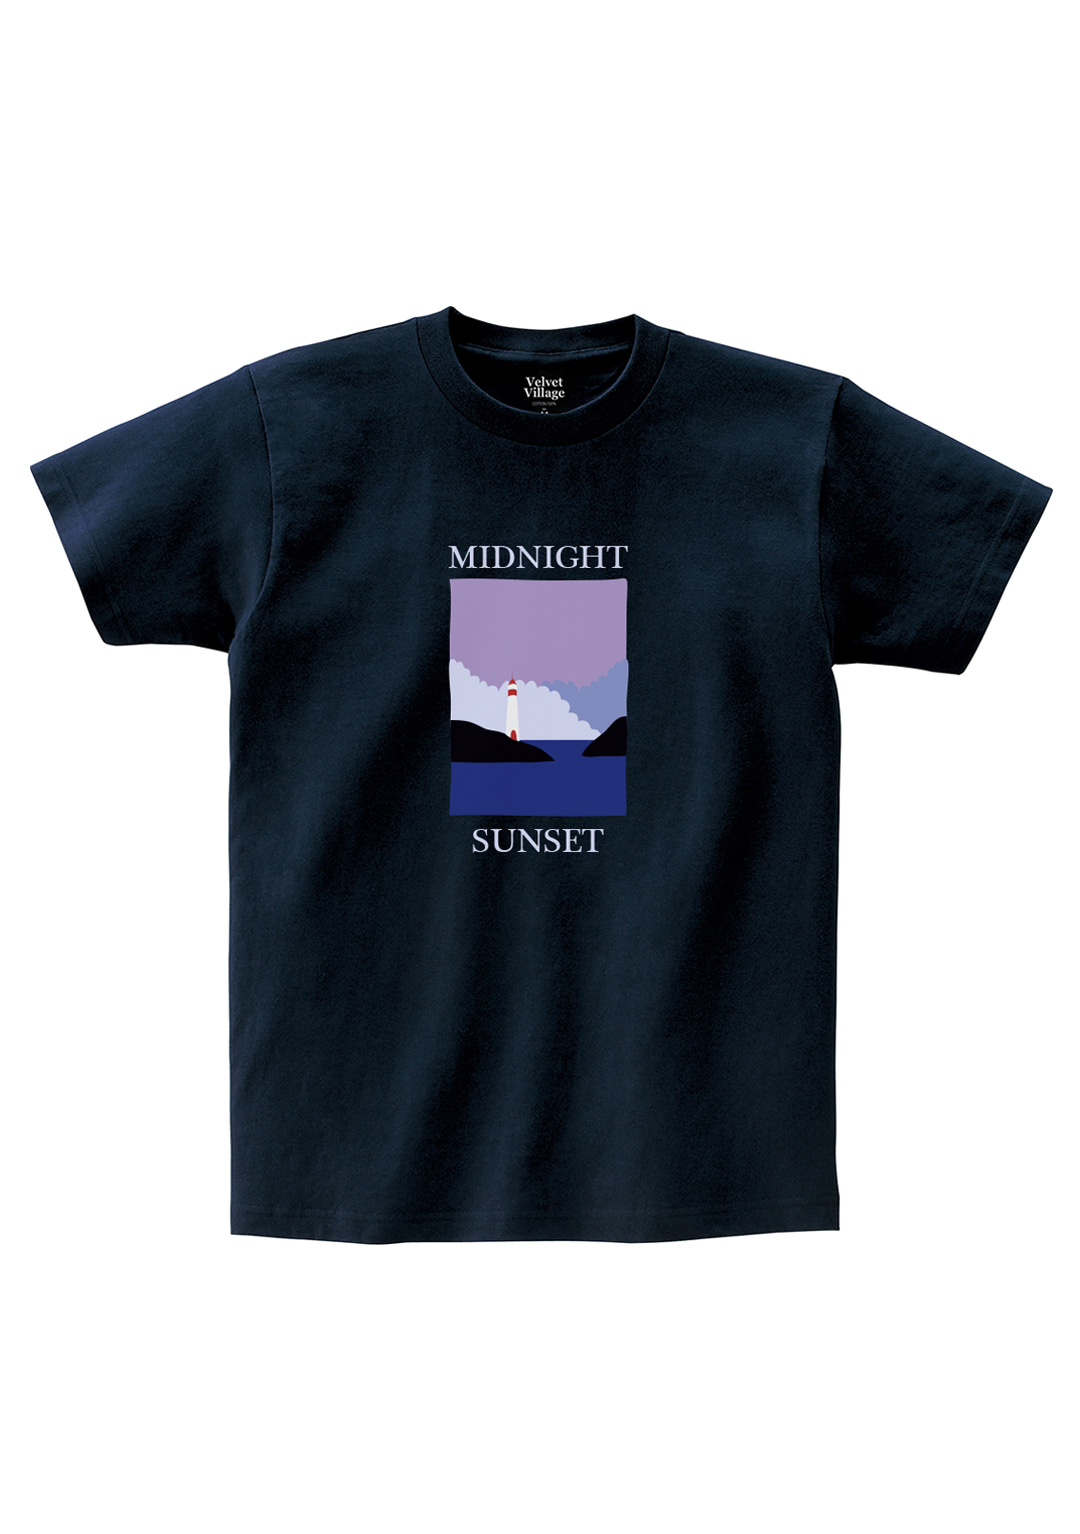 MIdnight T-shirts (Navy)